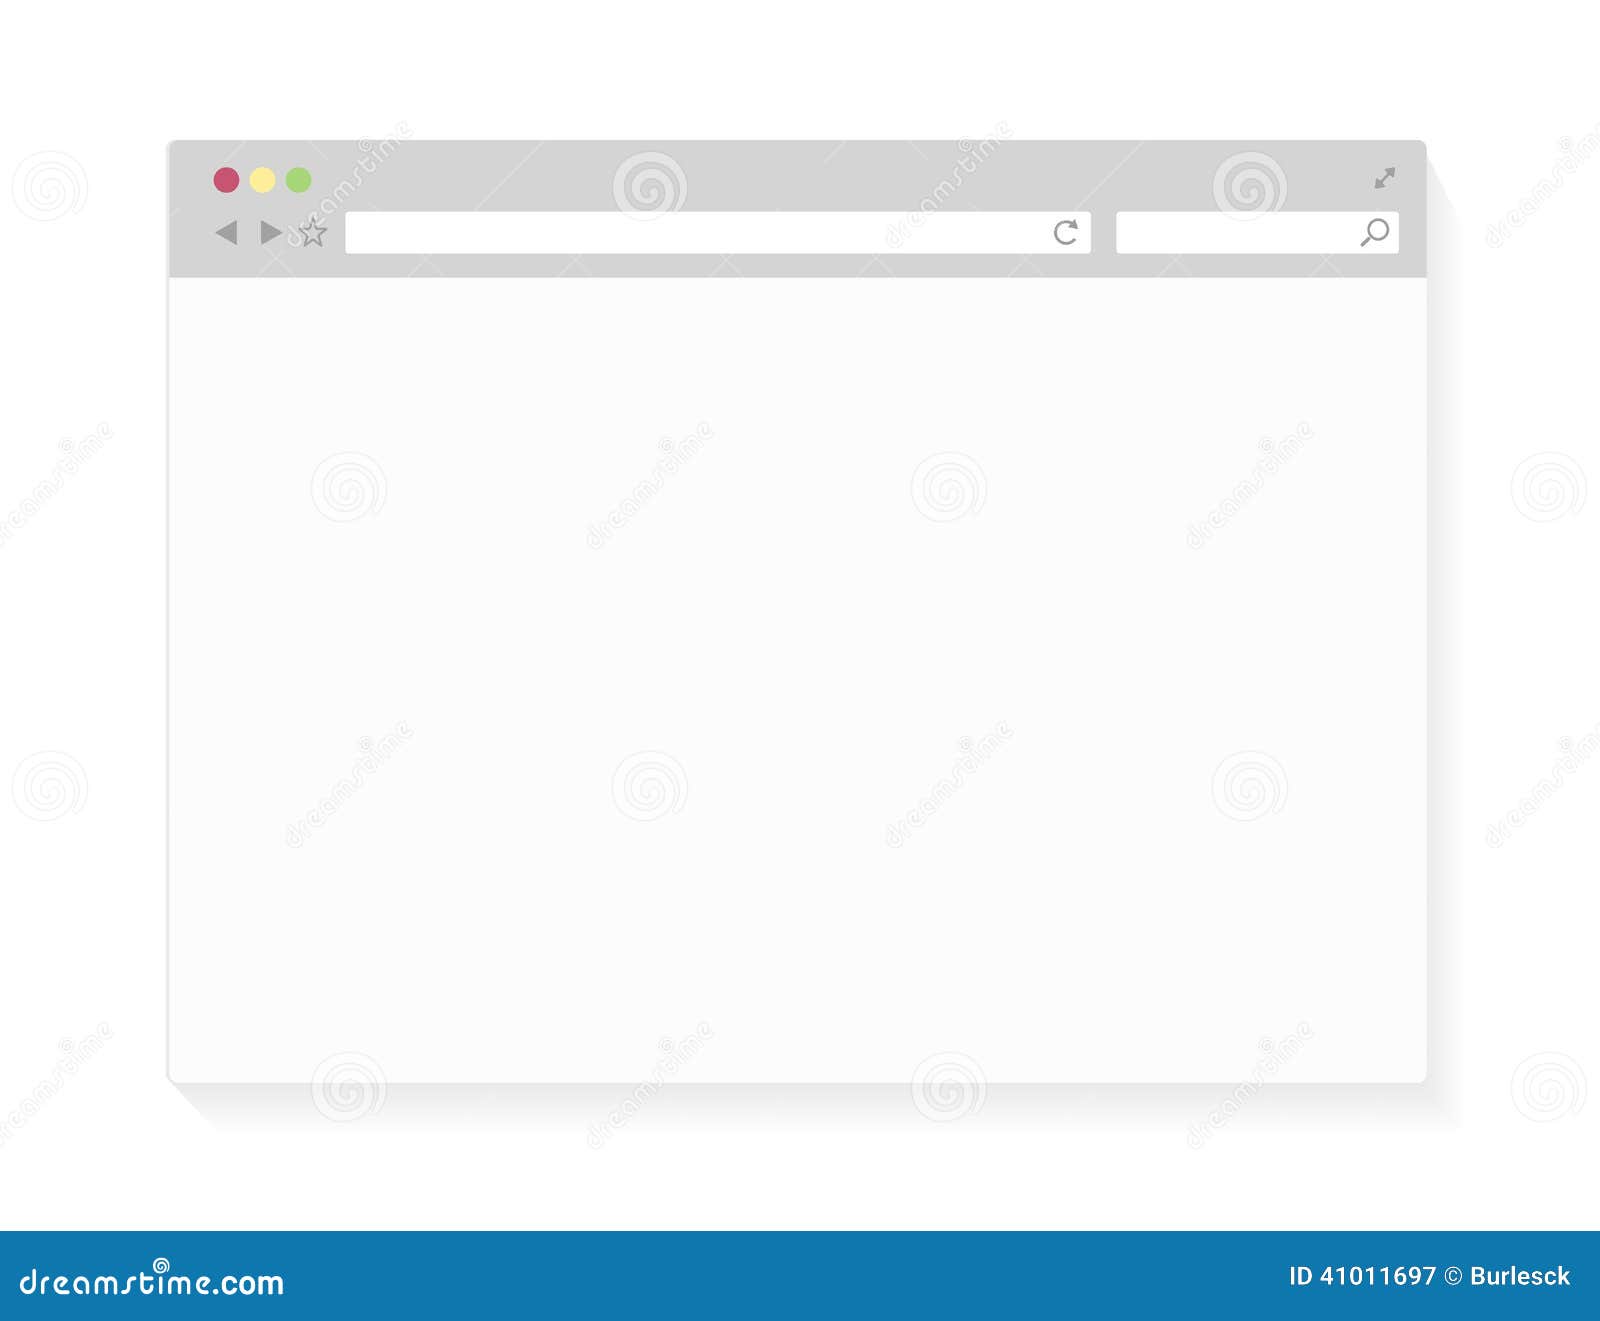 simple browser